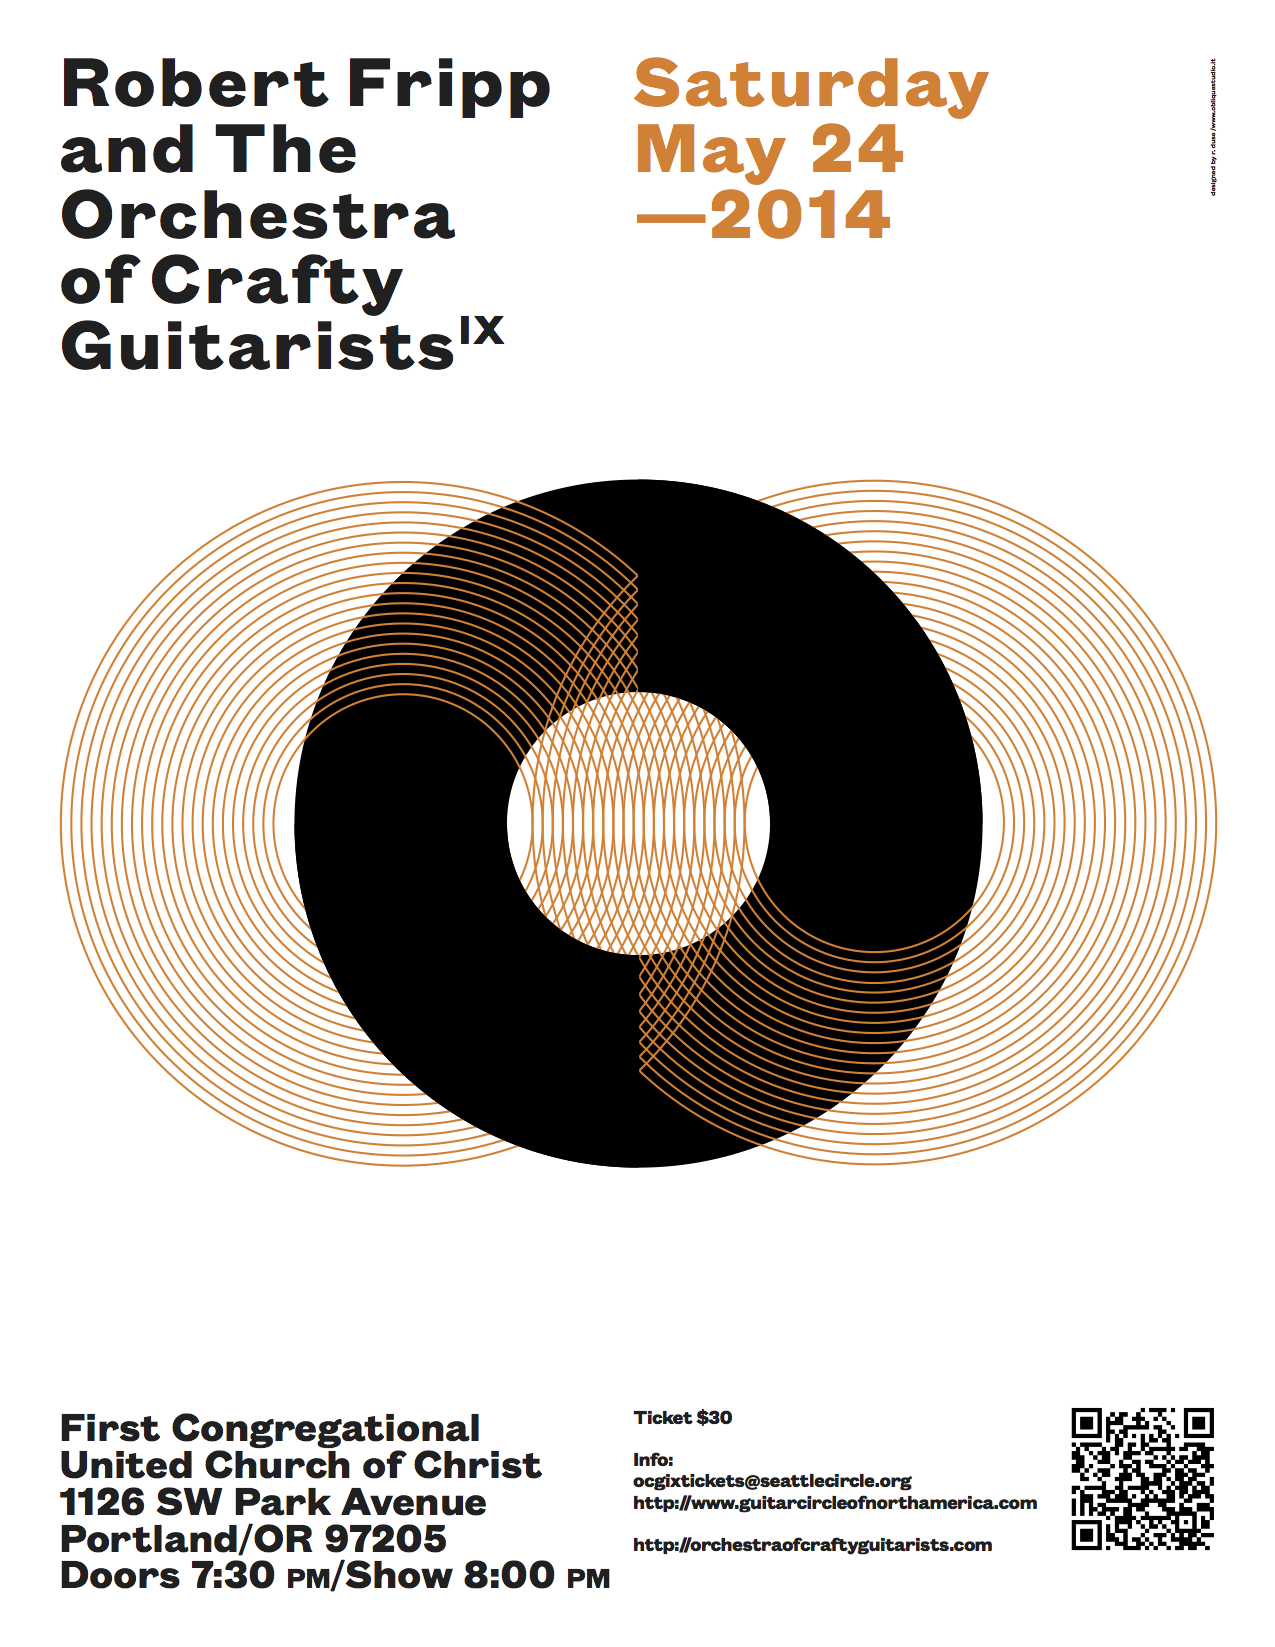 Robert Fripp & The Orchestra Of Crafty Guitarists IX